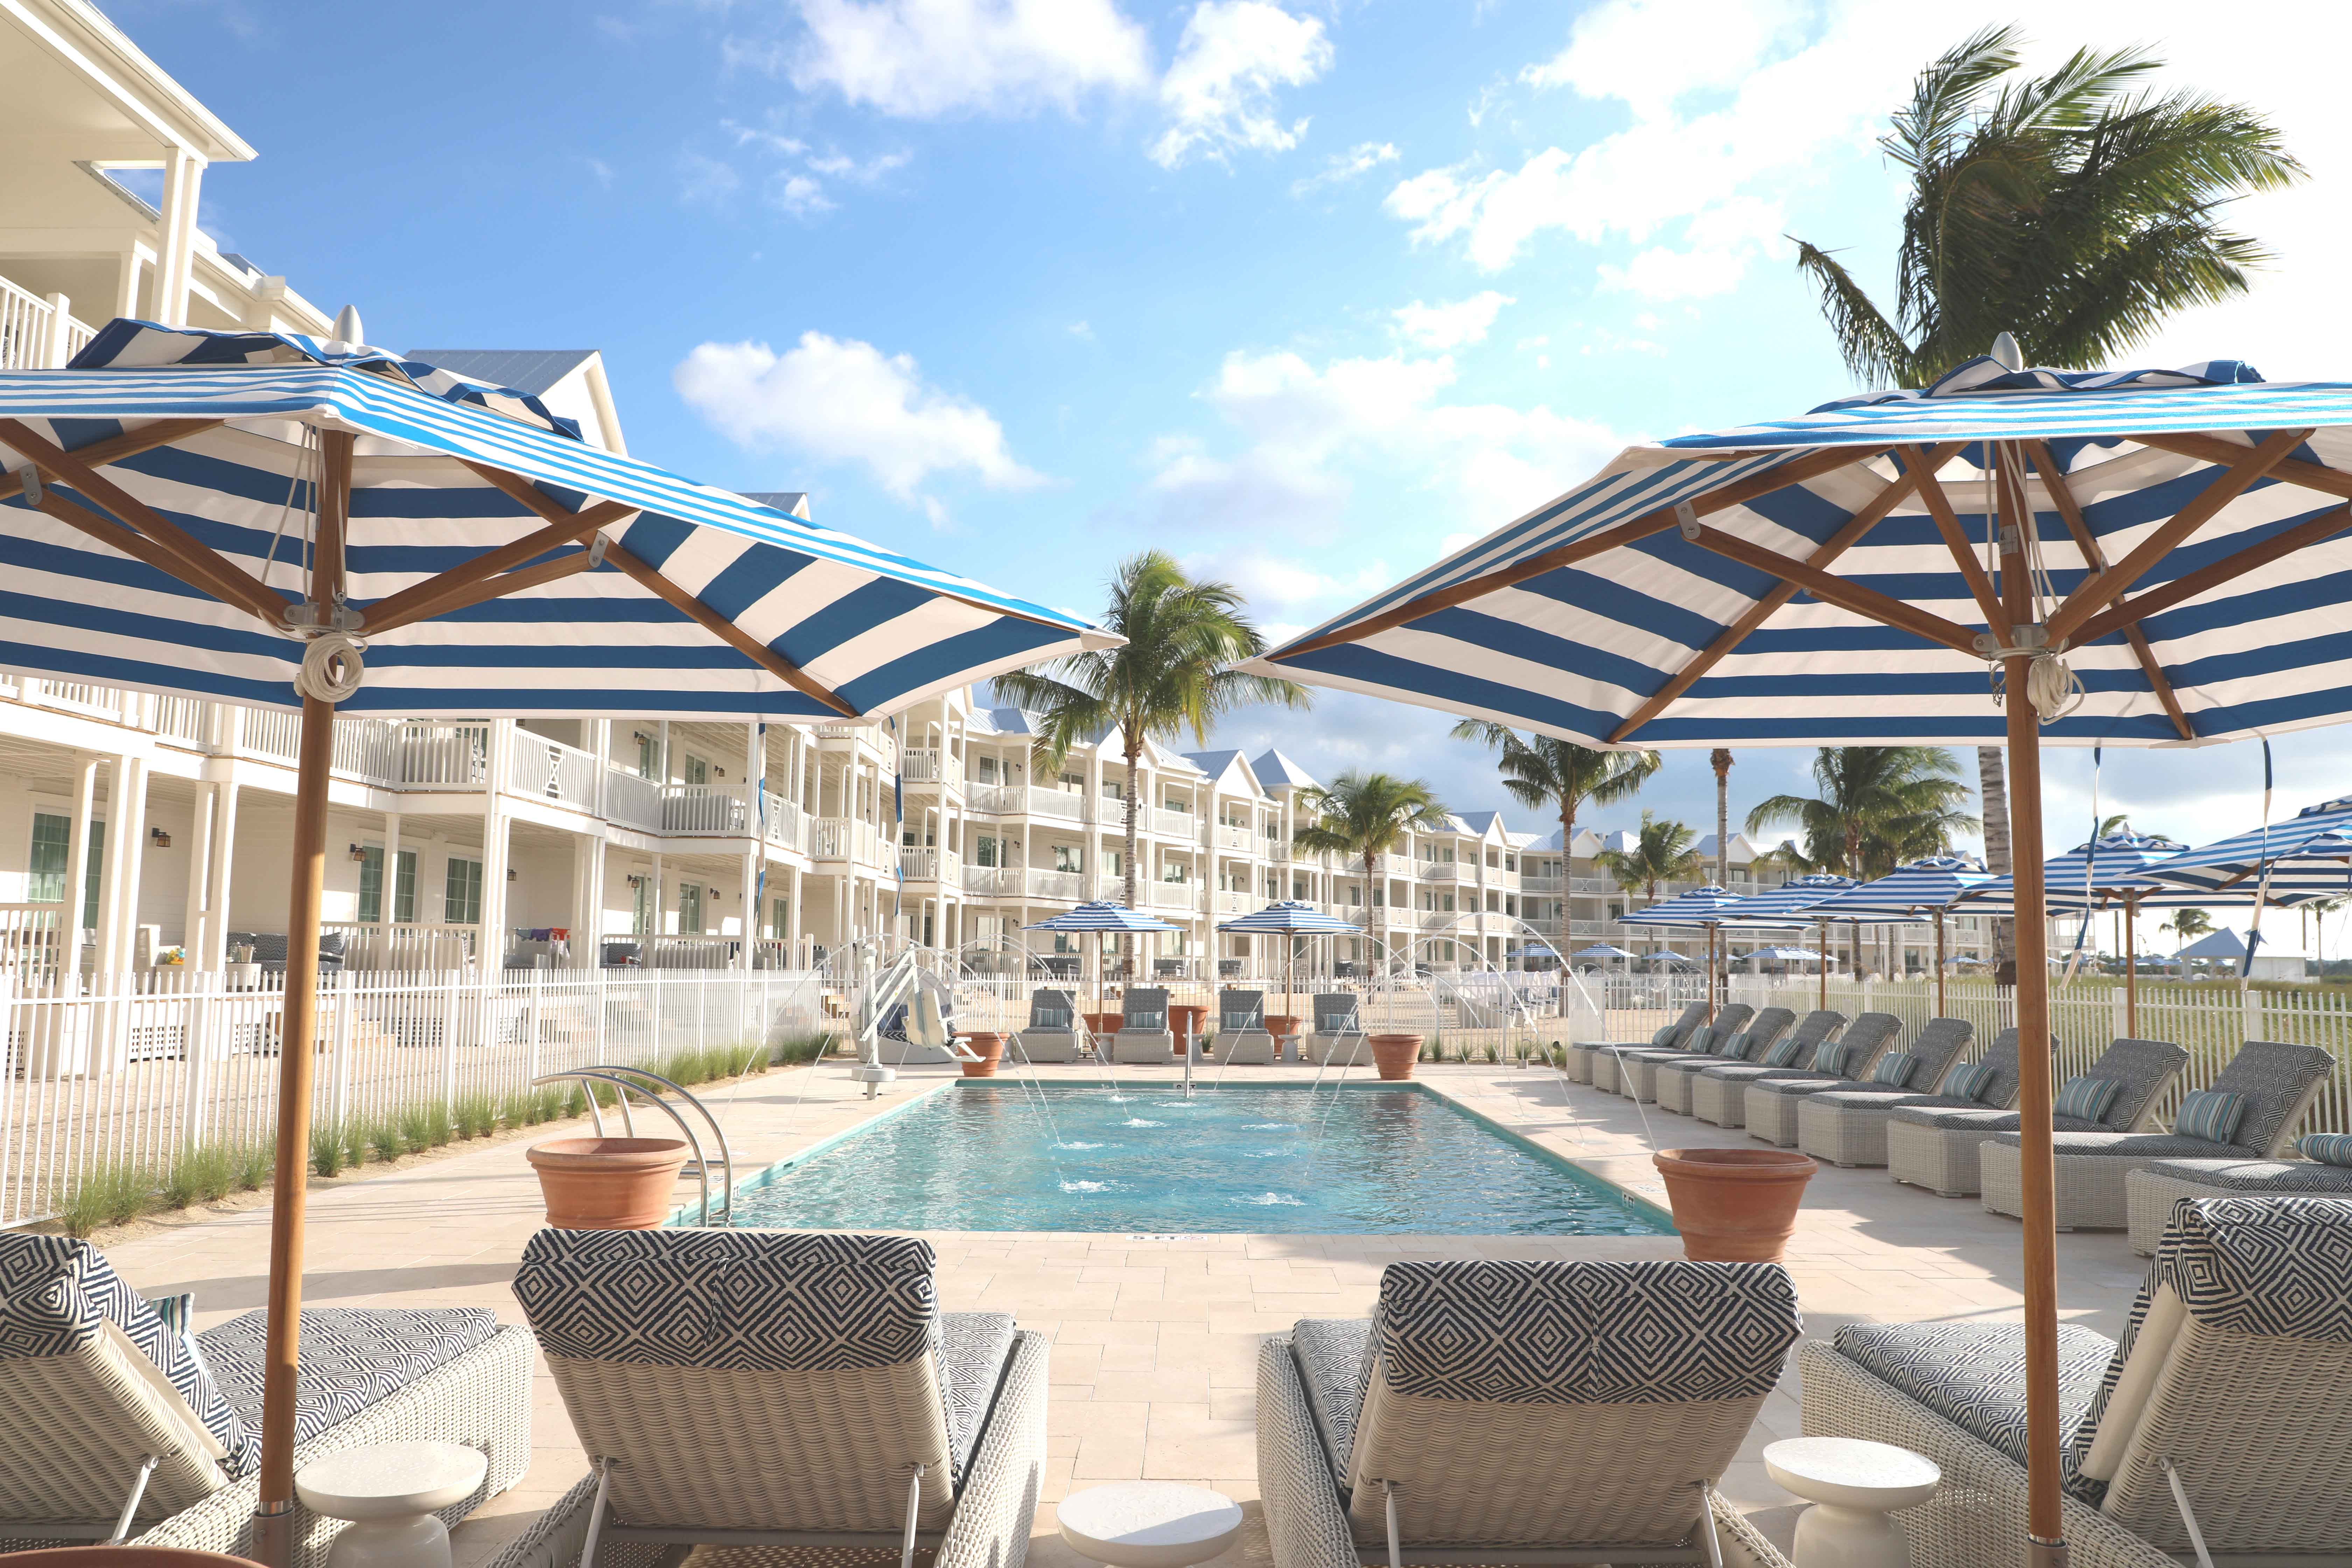 Style Spotlight on the Florida Keys - Santa Barbara Designs